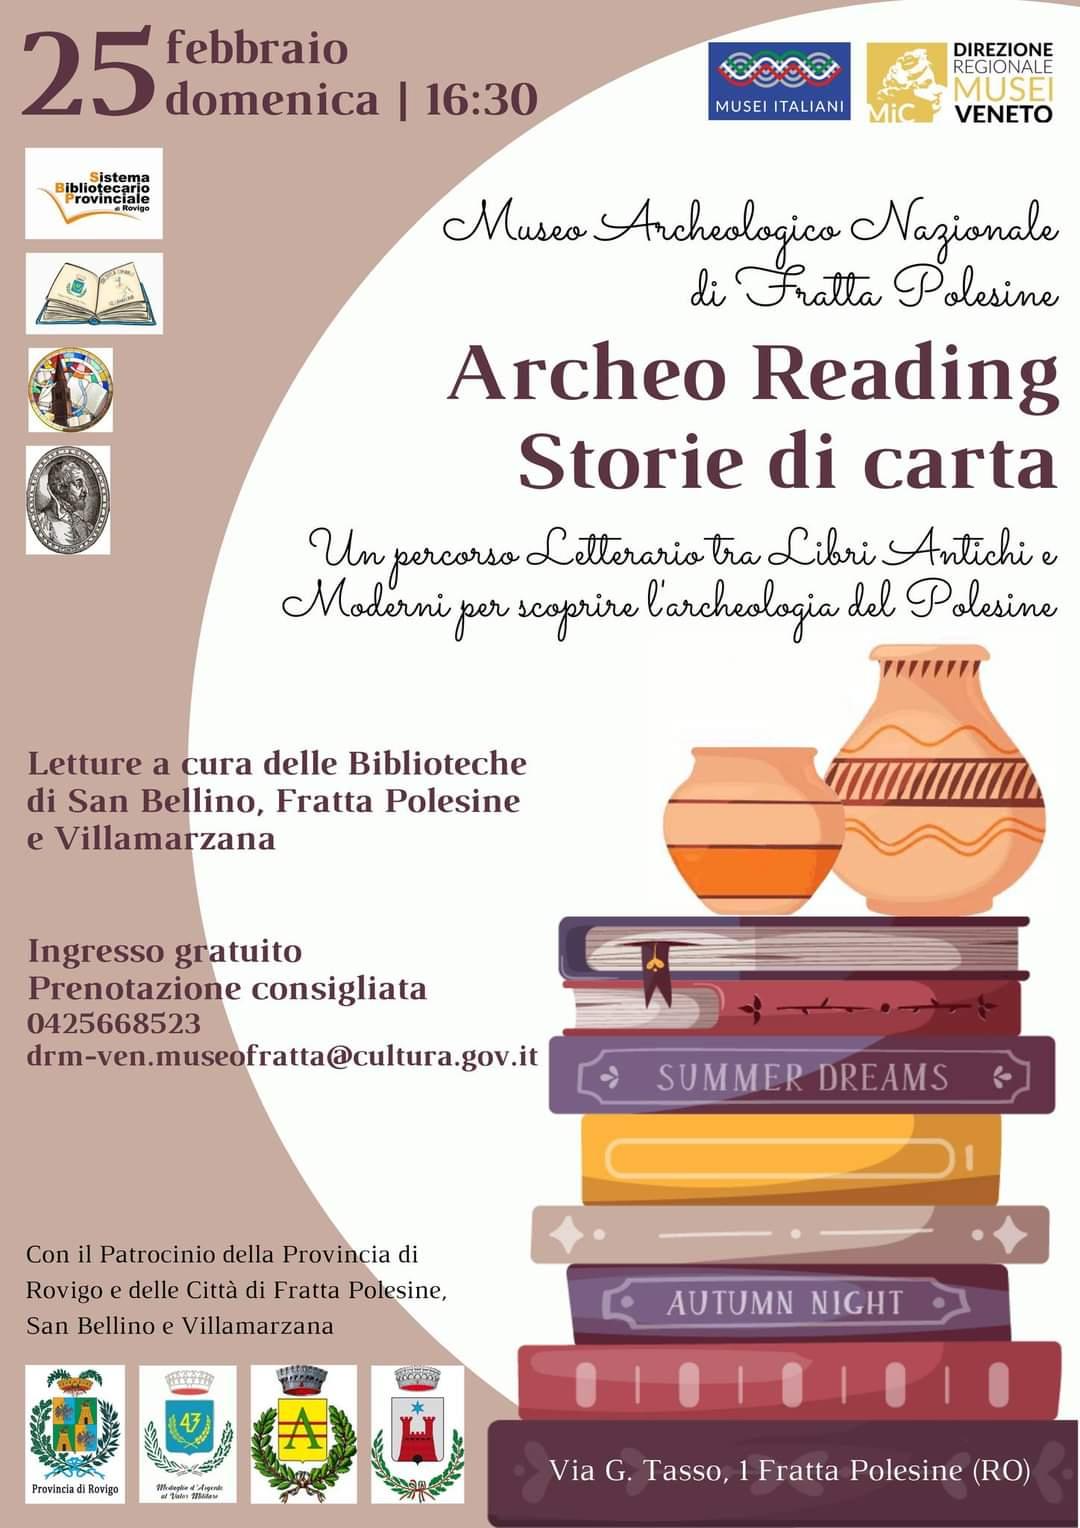 “Archeo Reading” 